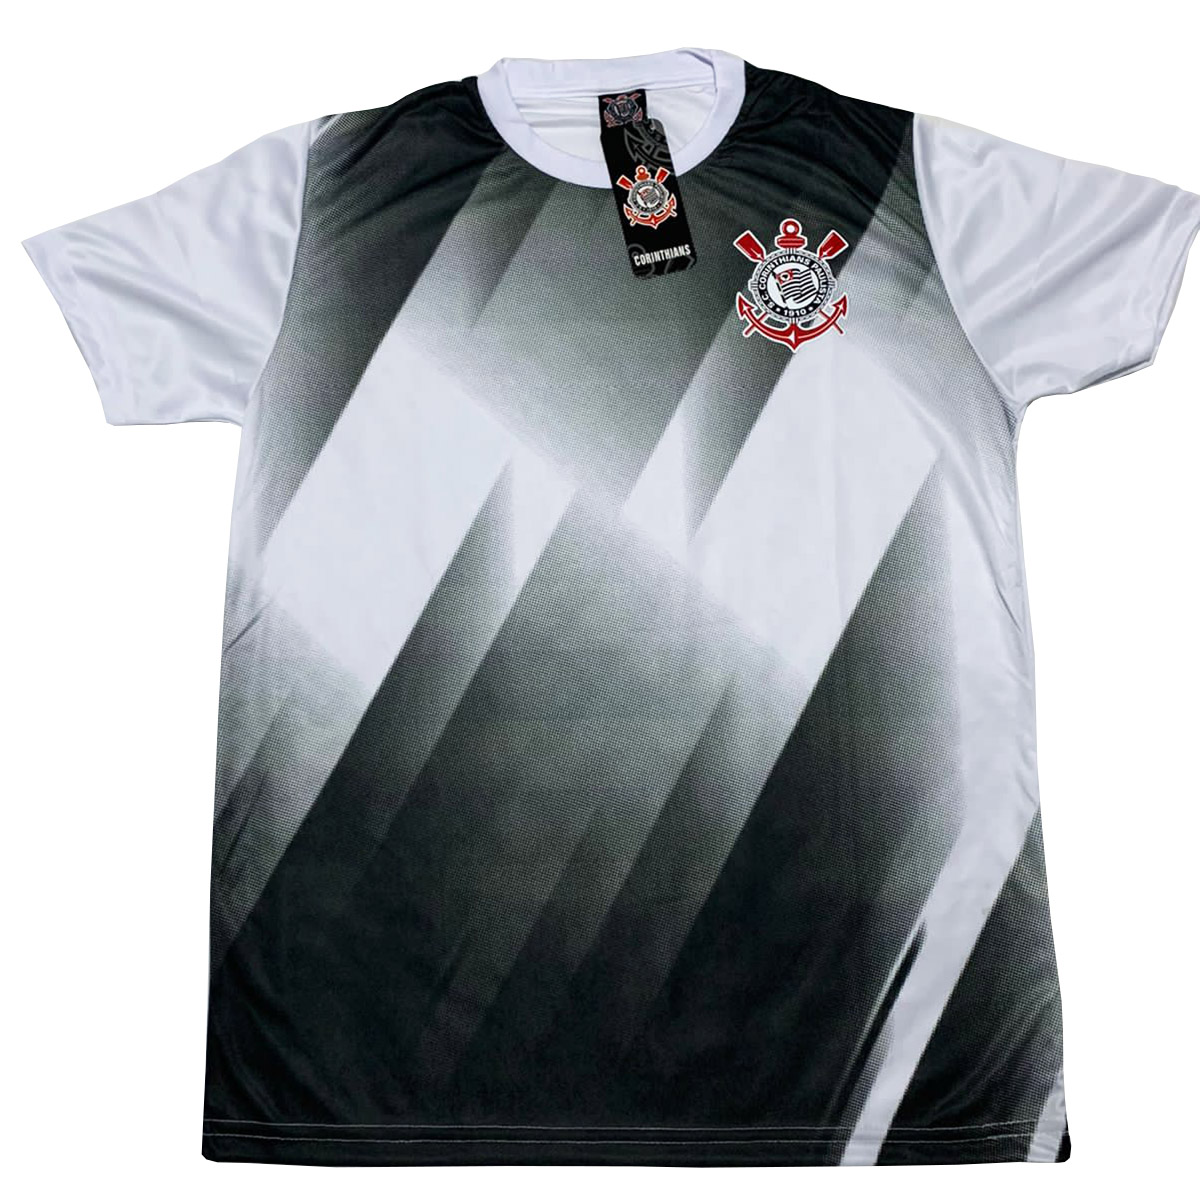 Camisa Corinthians Oficial Licenciada - Tam M